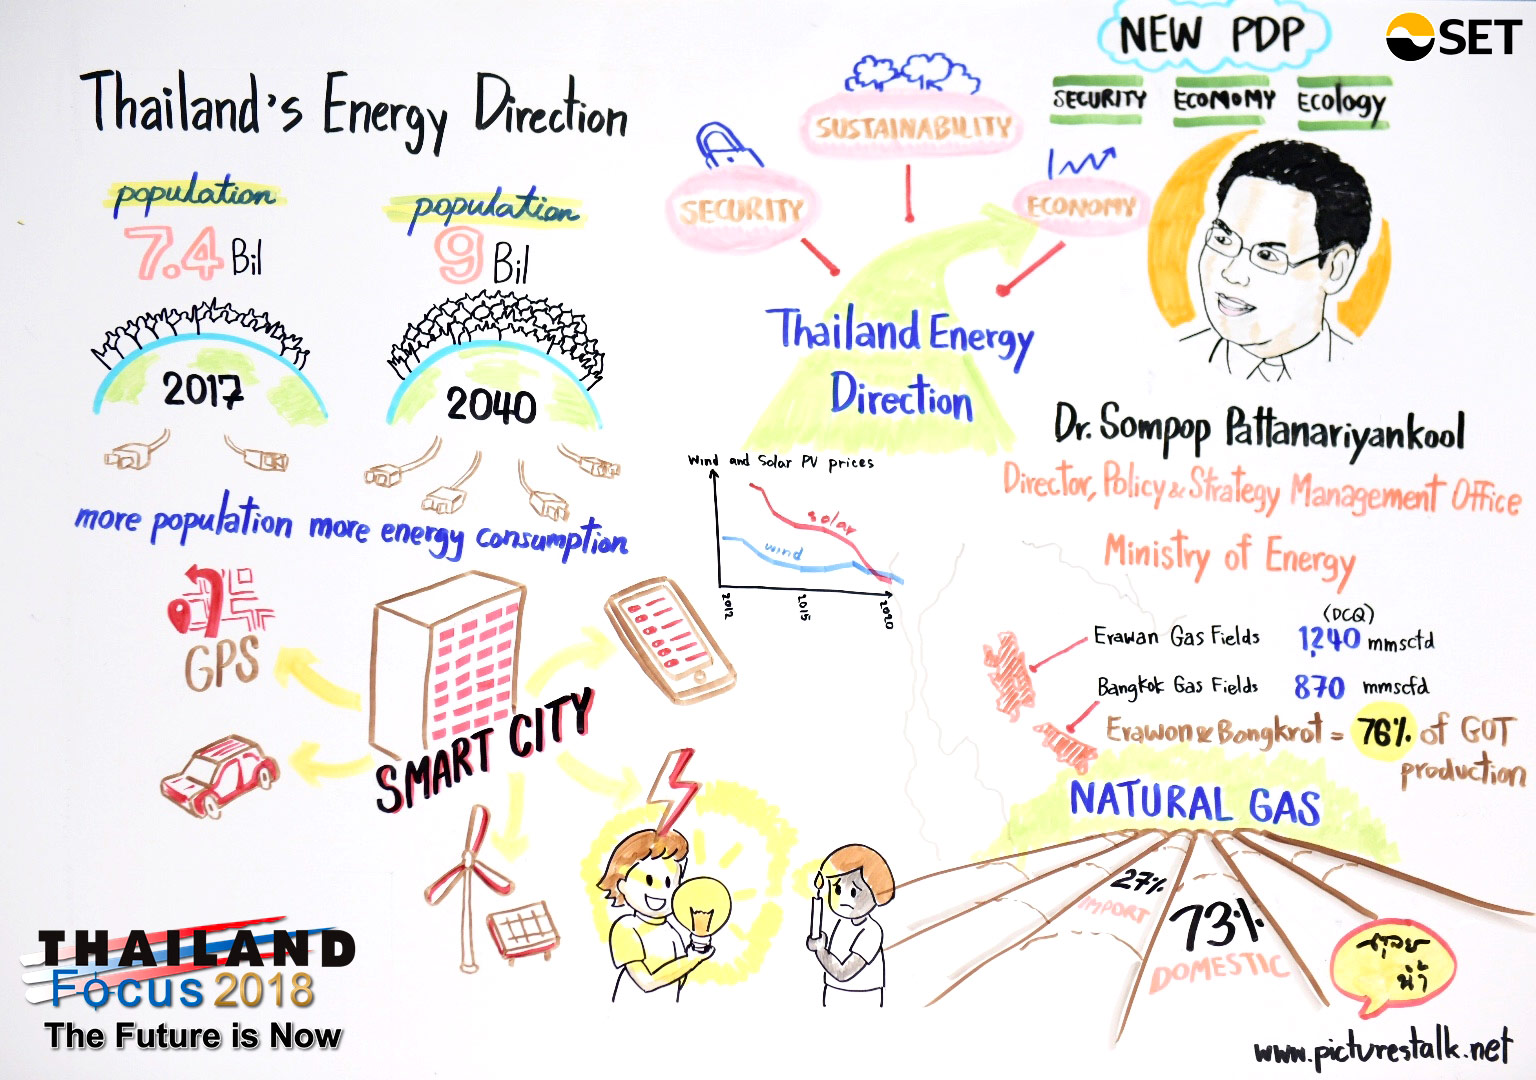 Thailand Focus 2018 - Thailand: Energy Direction - Dr. Sompop Pattanariyankool